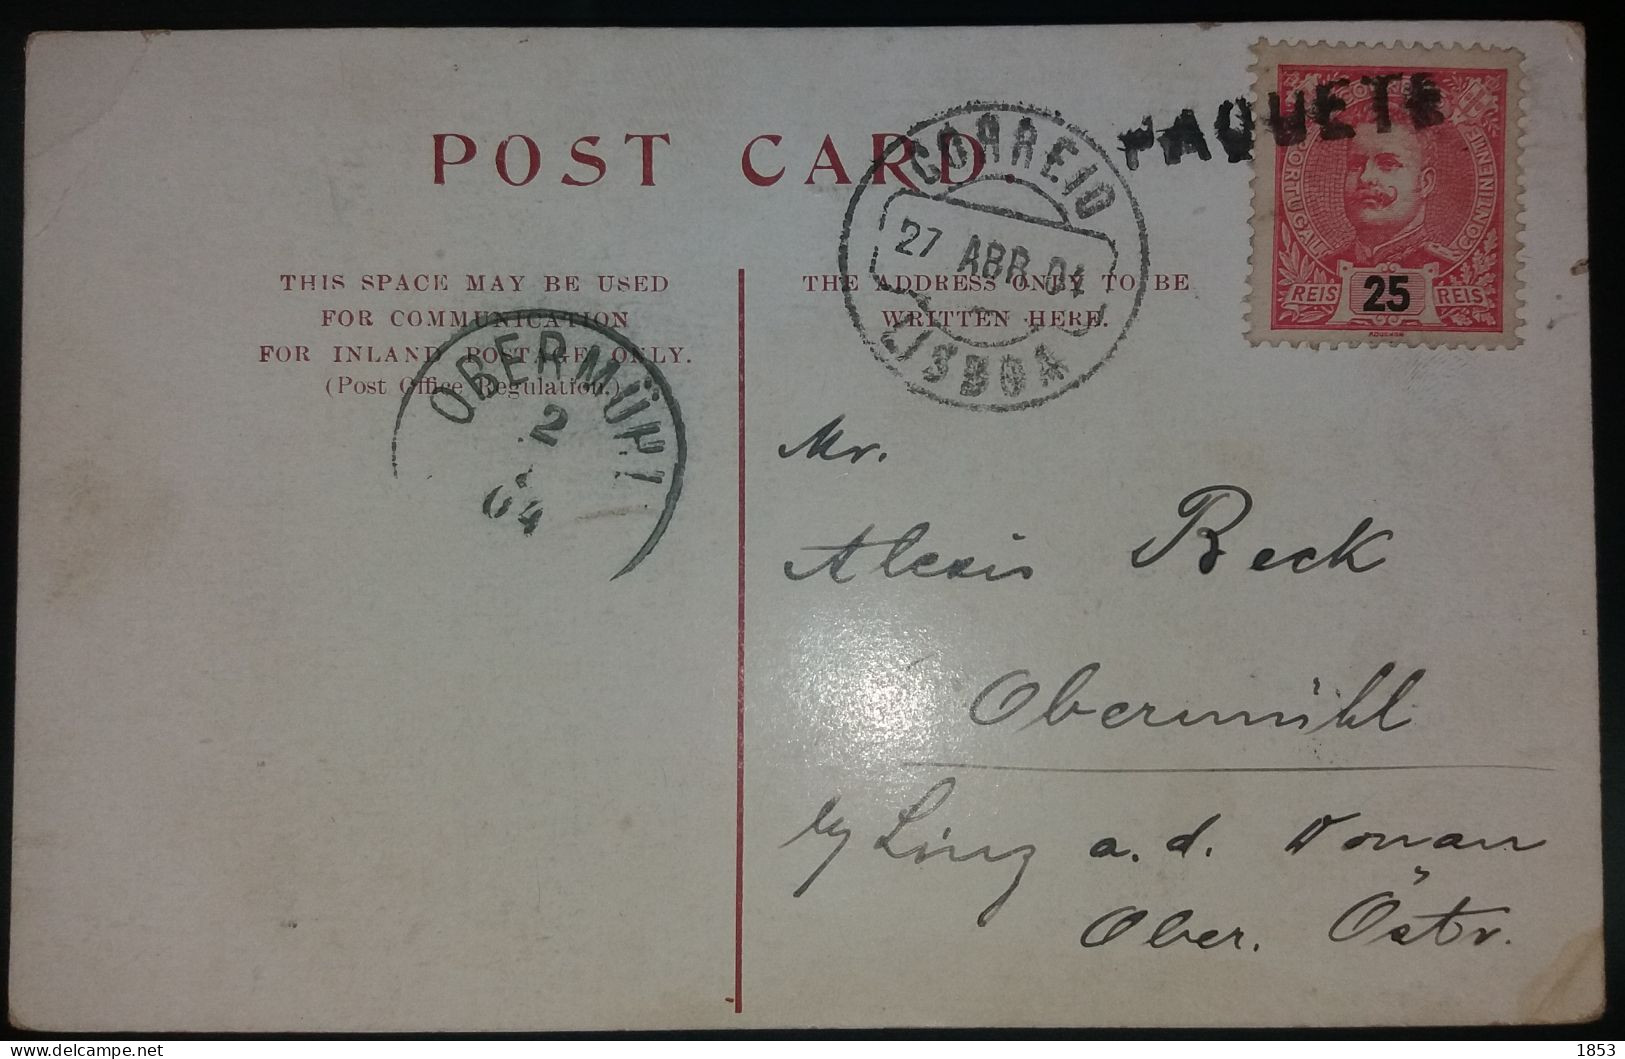 D.CARLOS I - CORREIO MARITIMO - MARCOFILIA - PAQUETE   R.M.S.THAMES - Postmark Collection